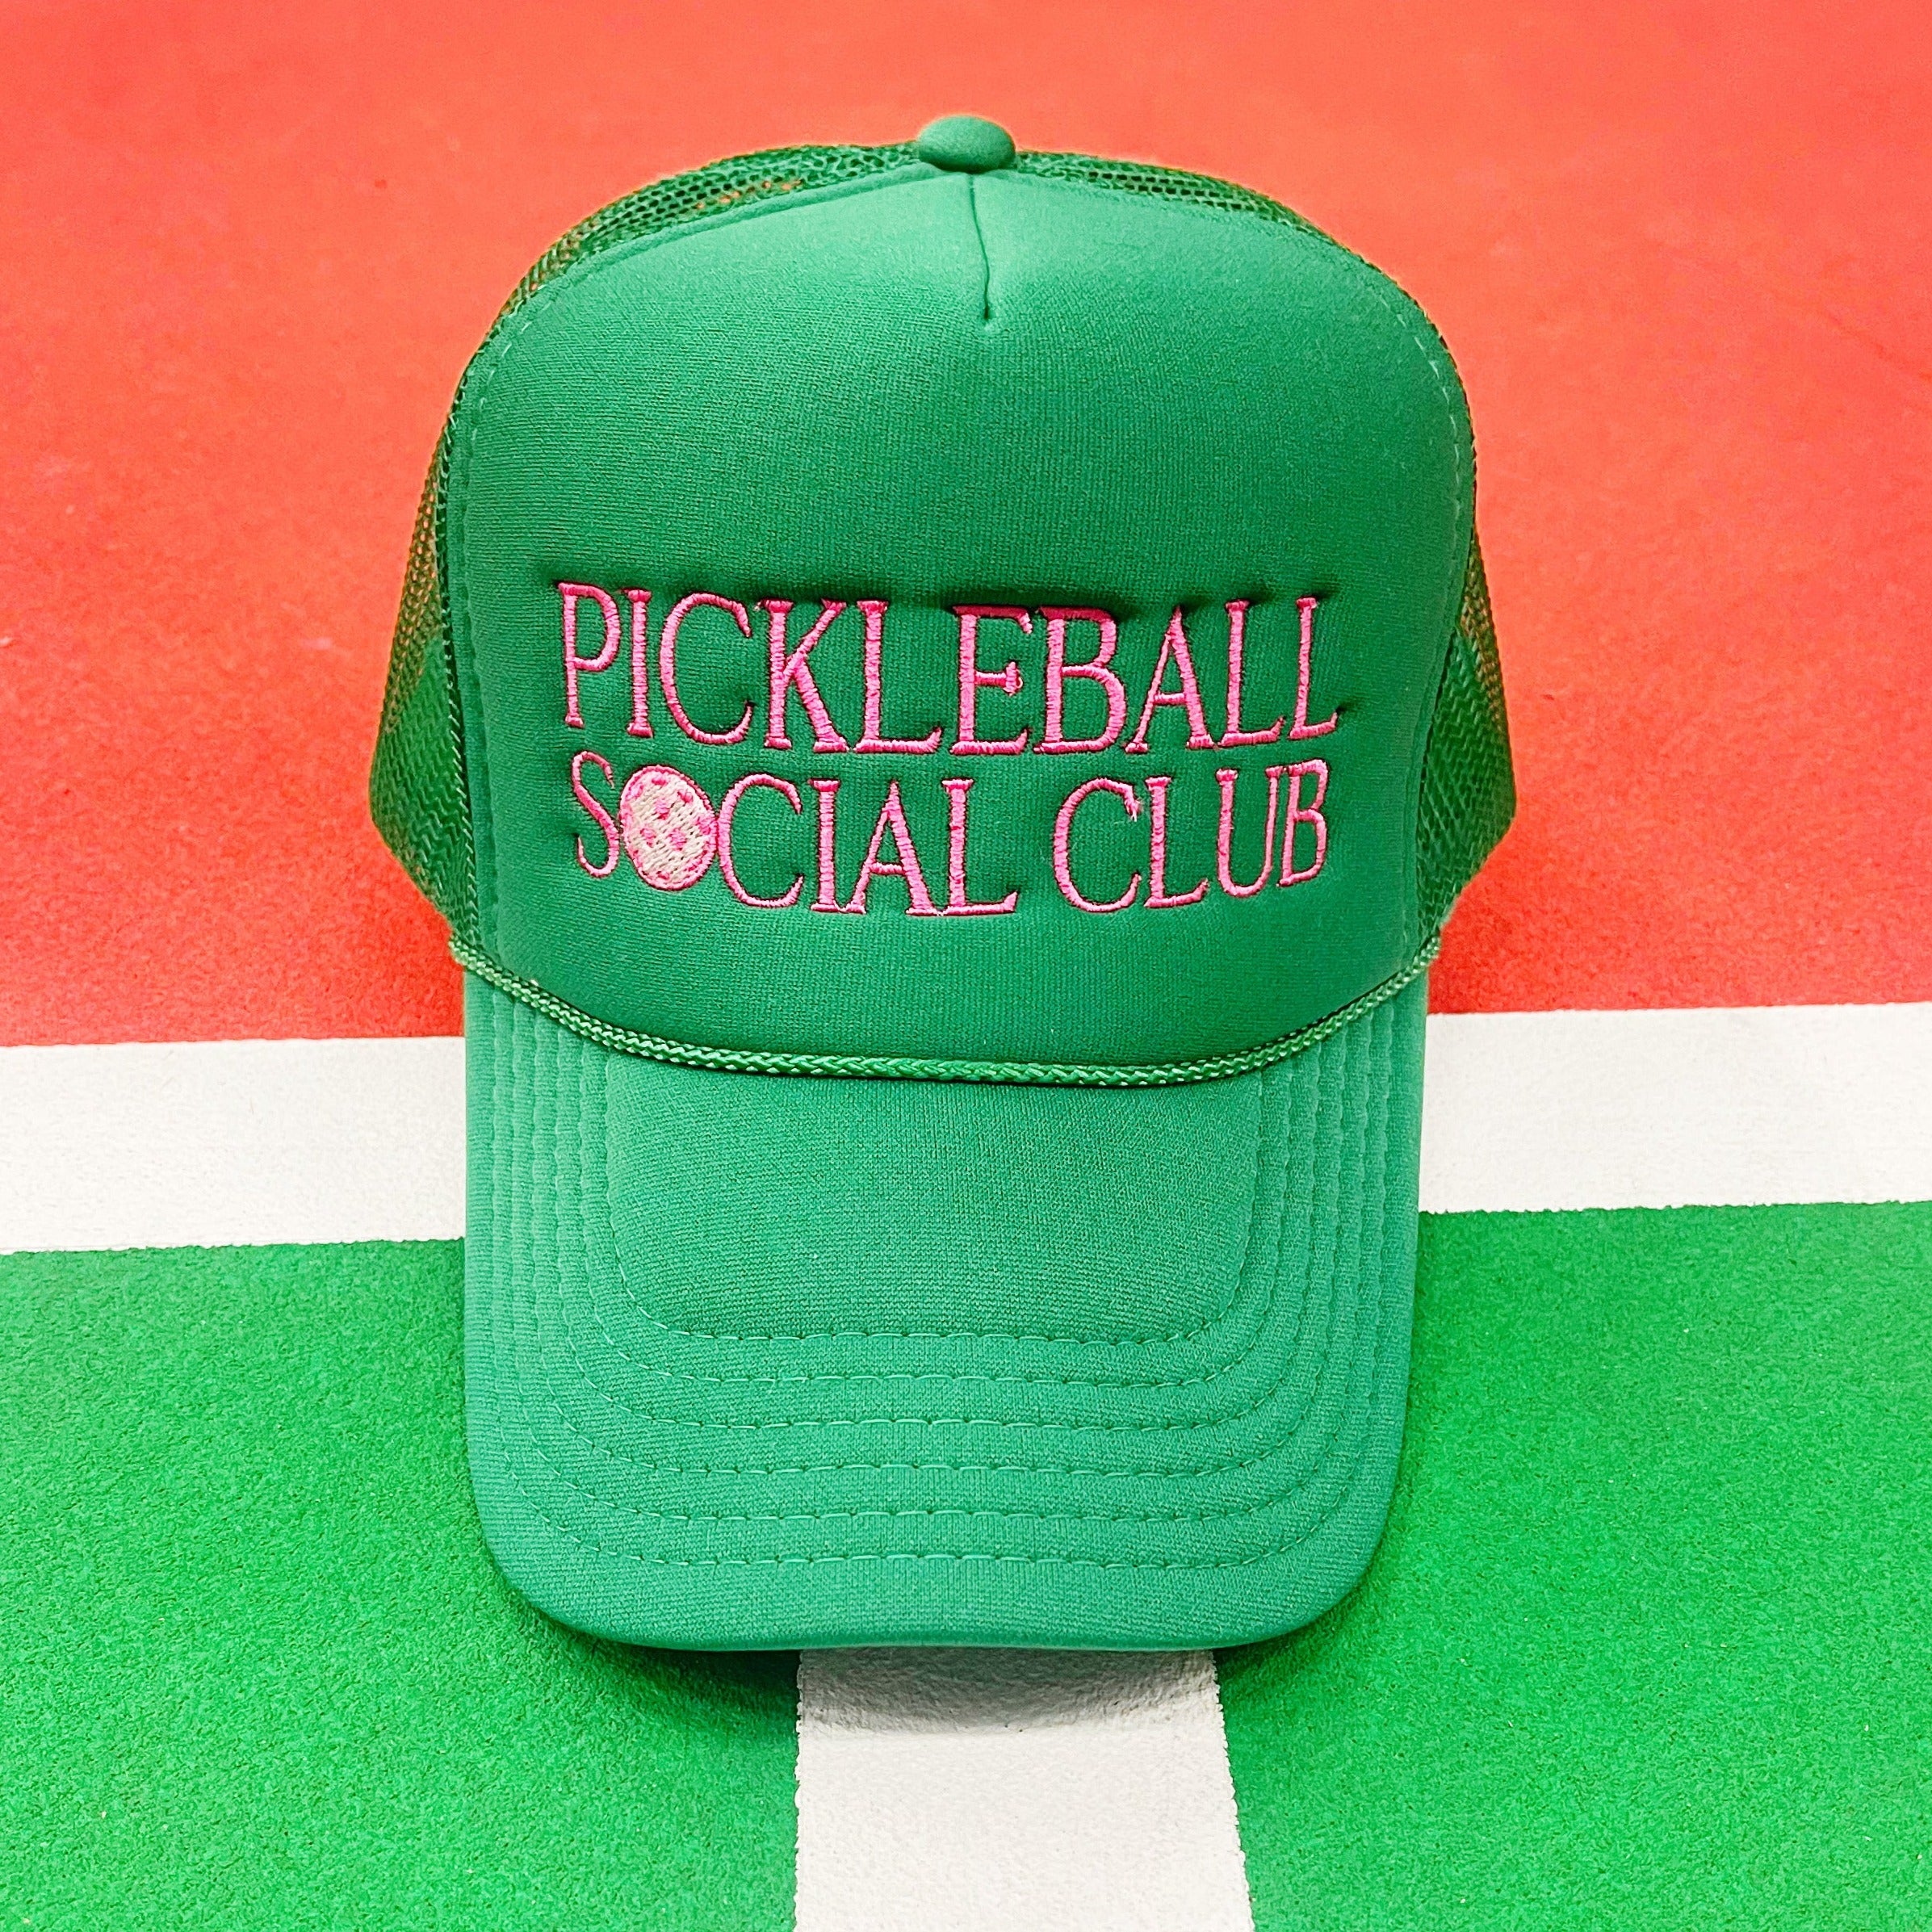 Pickleball Social Club Green Trucker Hat